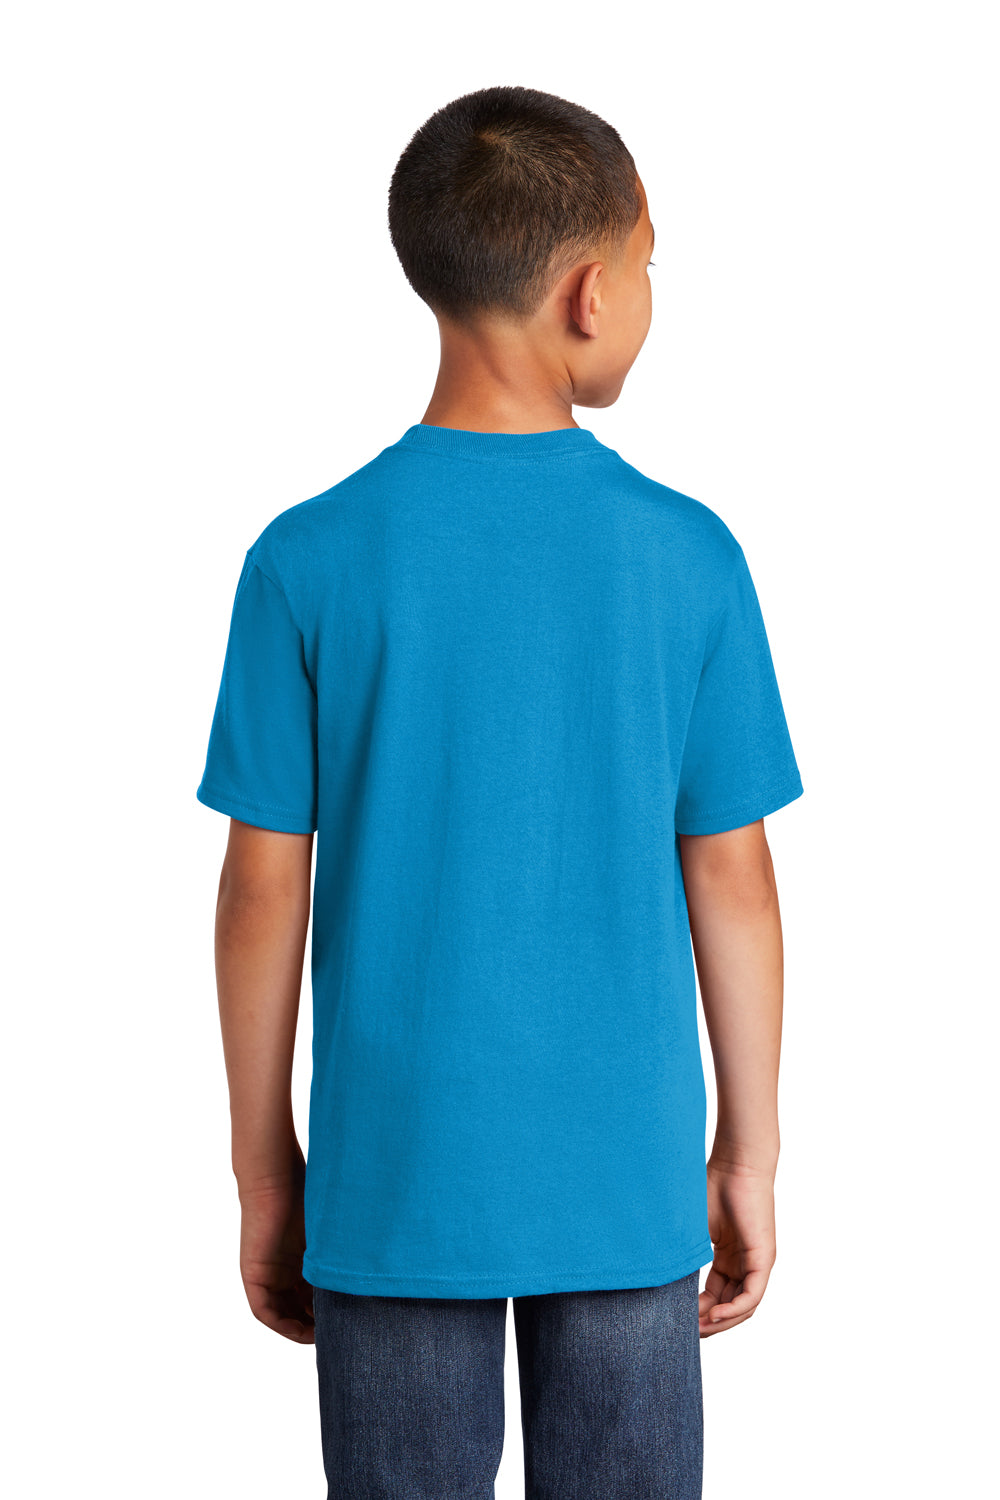 Port & Company PC54Y Youth Core Short Sleeve Crewneck T-Shirt Sapphire Blue Back